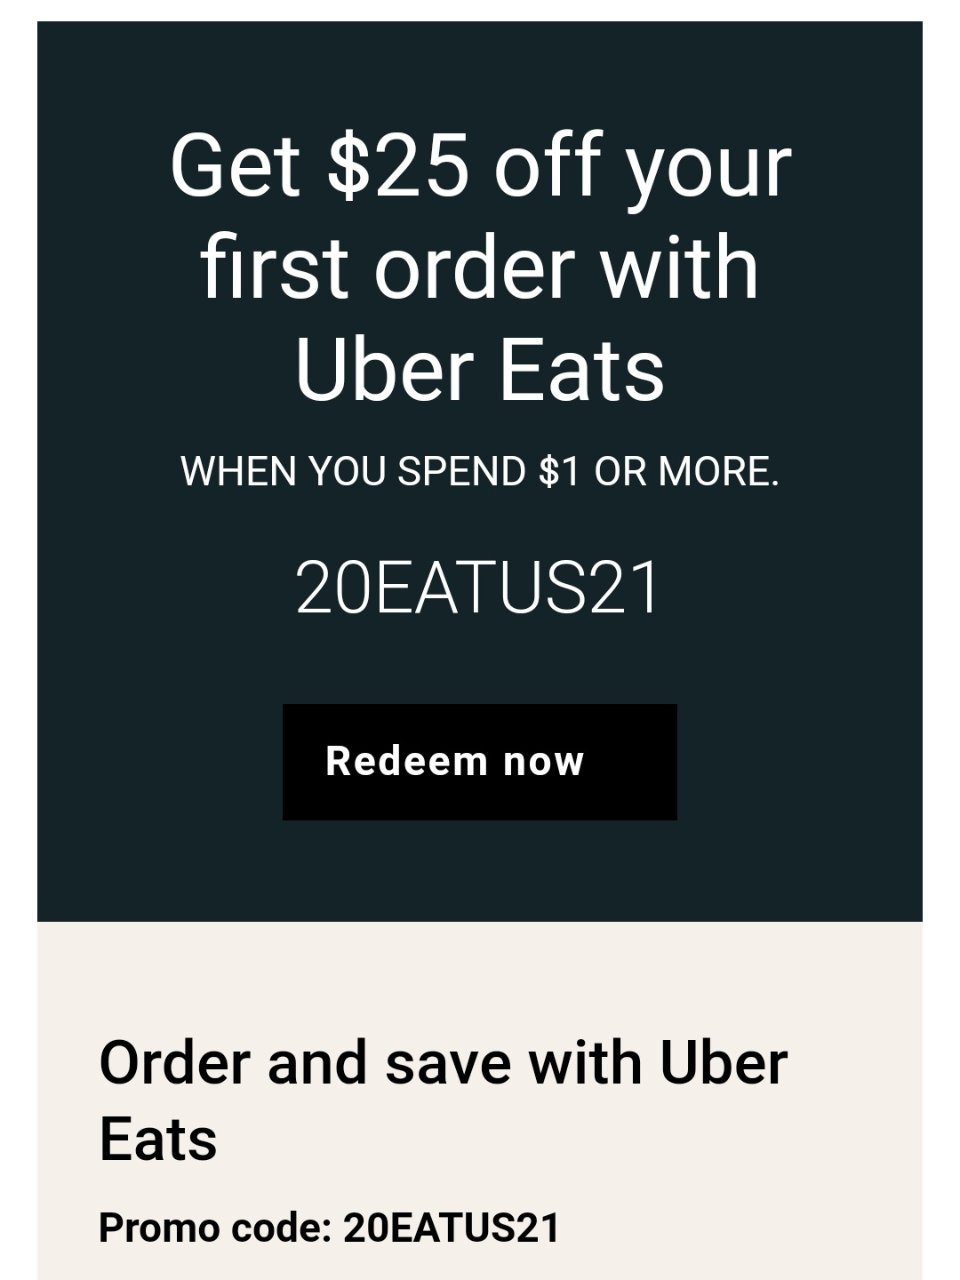 uber eats